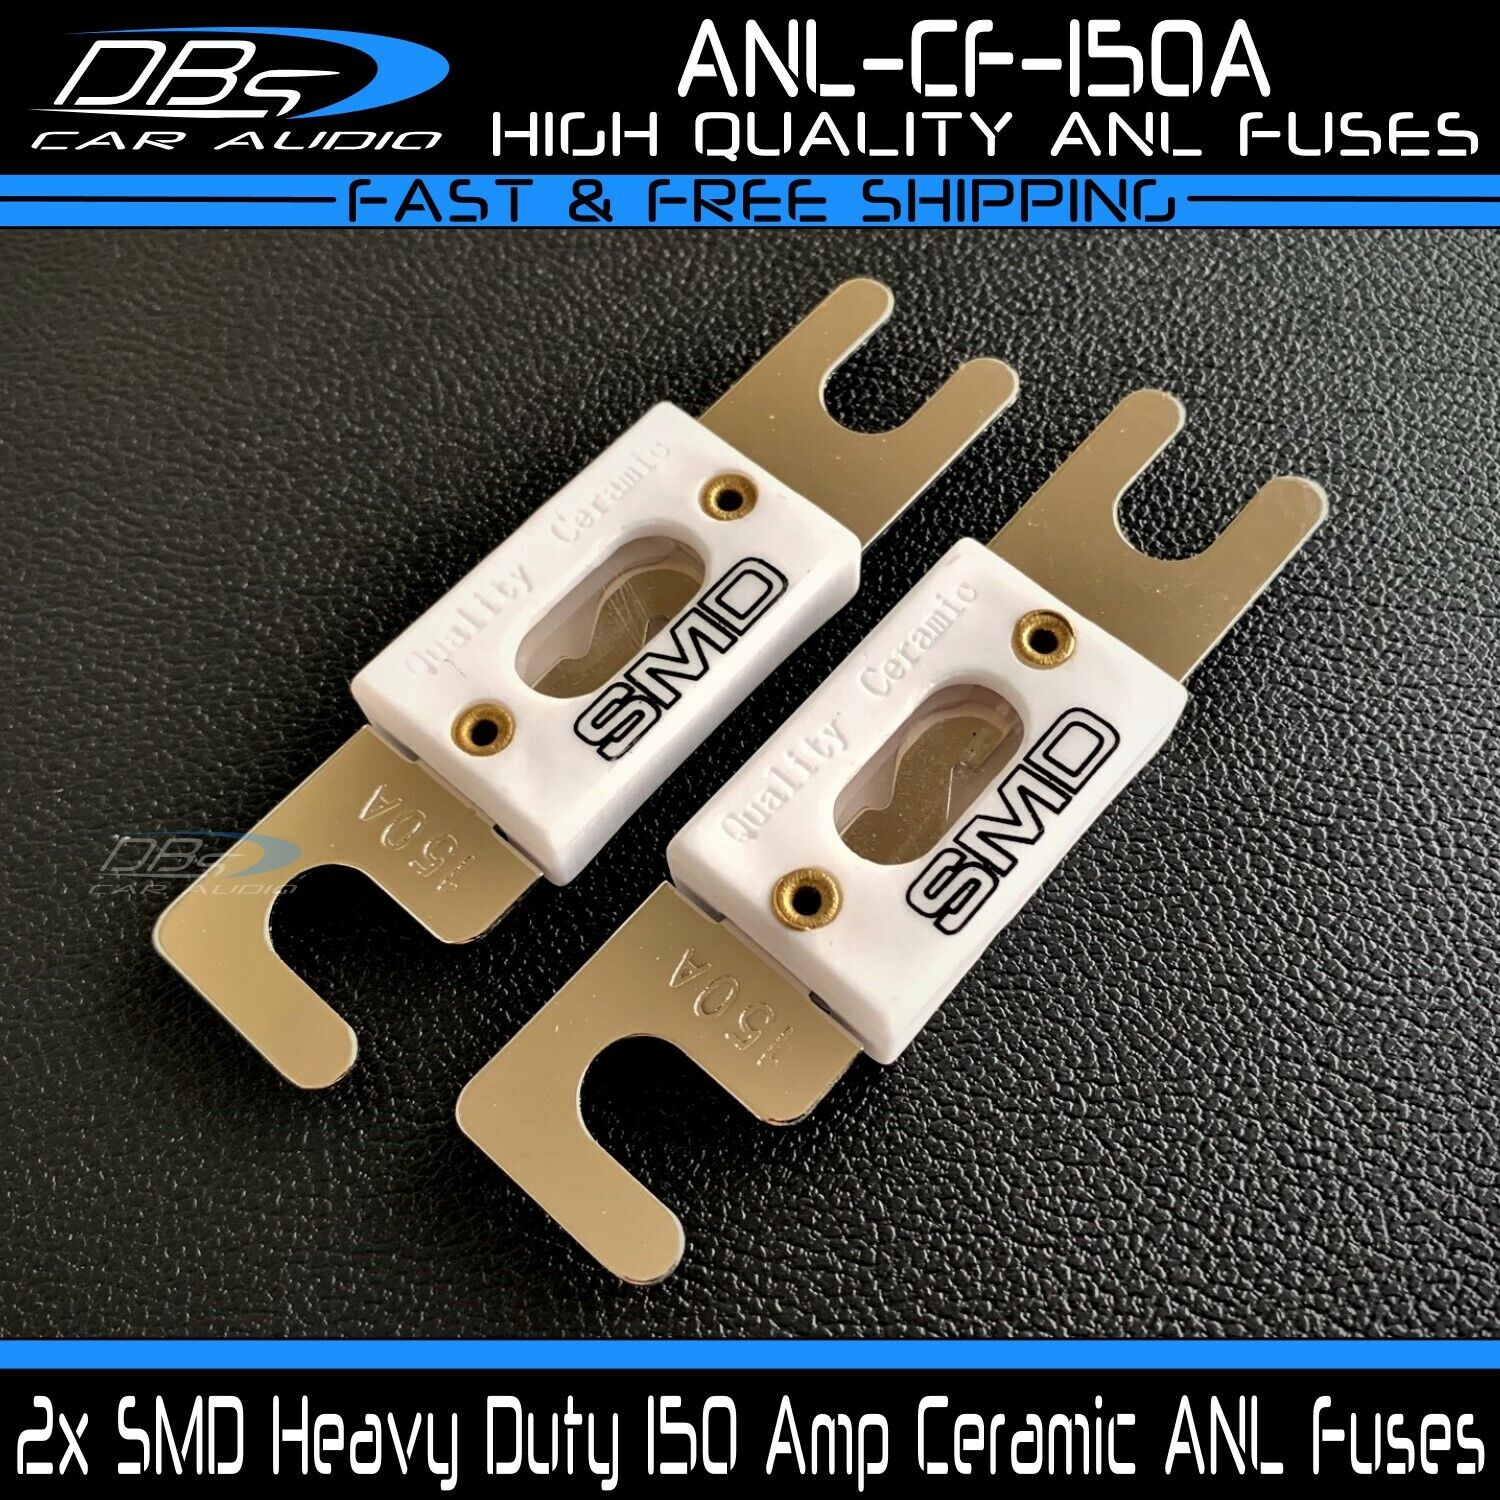 2x Steve Meade SMD 150 Amp Ceramic ANL Fuse 150A Heavy Duty High Quality Fuses SMD ANL-CF-150A ANL CF-150A